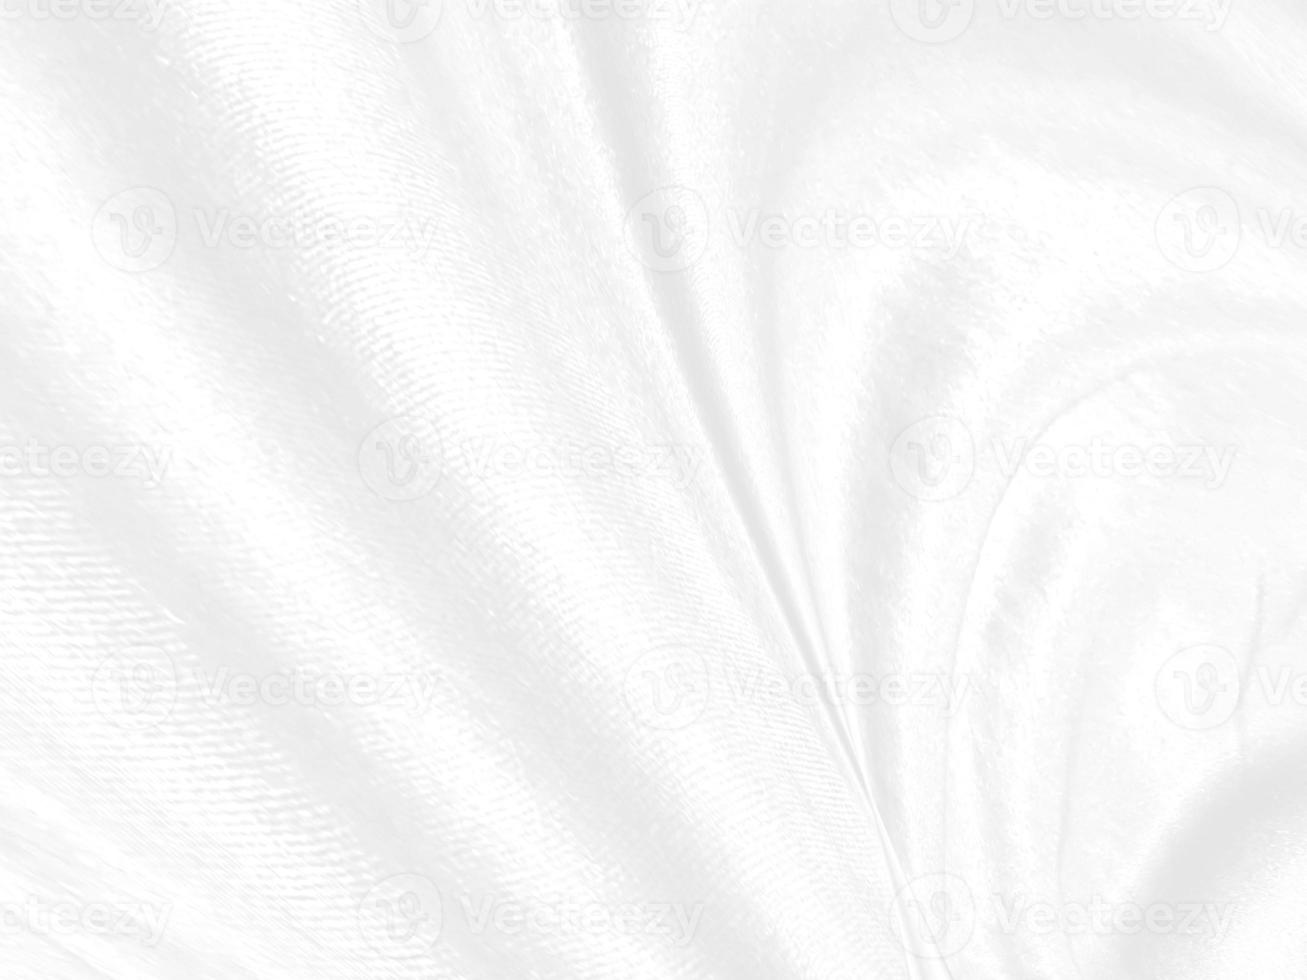 schoon geweven mode textiel mooi zacht kleding stof abstract glad kromme vorm decoratief wit achtergrond foto